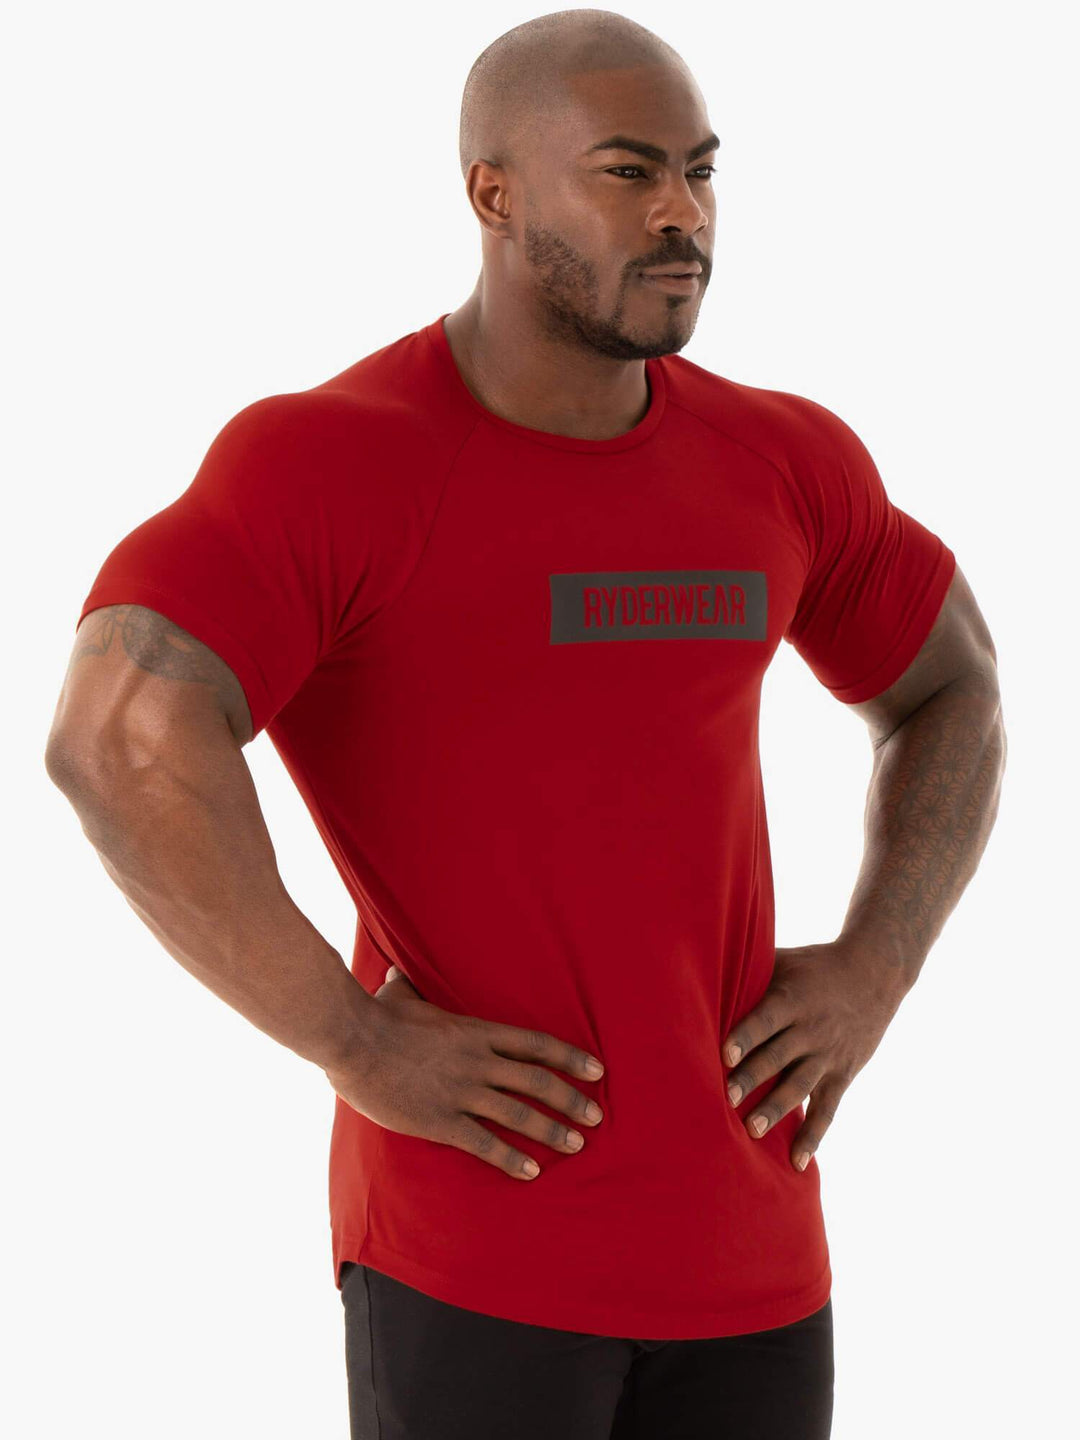 Base T-Shirt - Red Clothing Ryderwear 